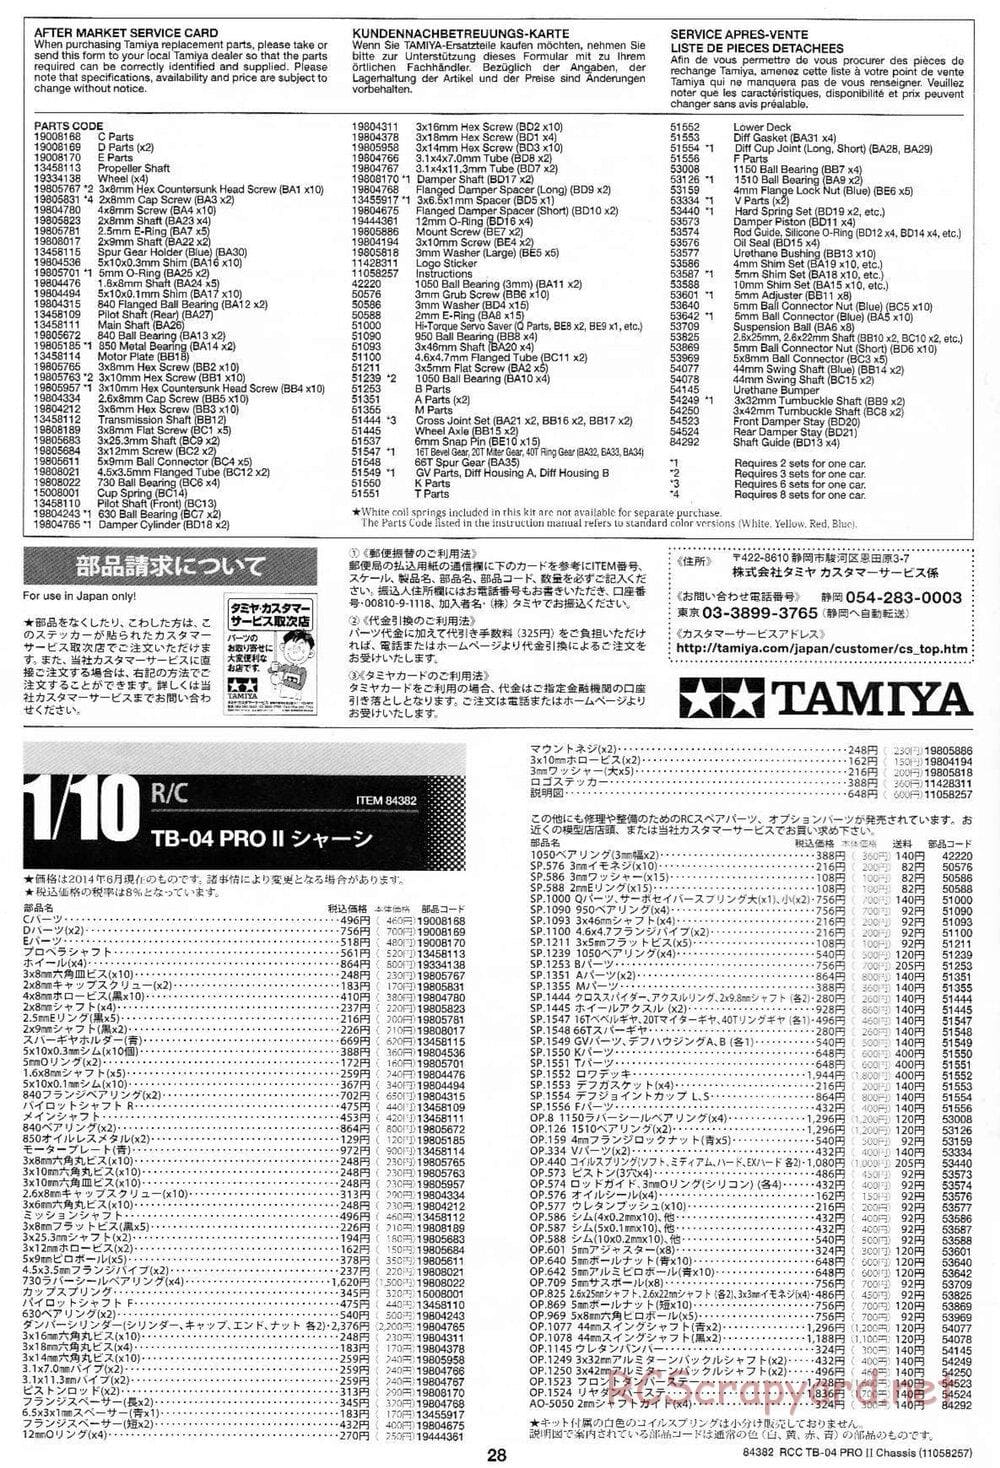 Tamiya - TB-04 Pro II Chassis - Manual - Page 28